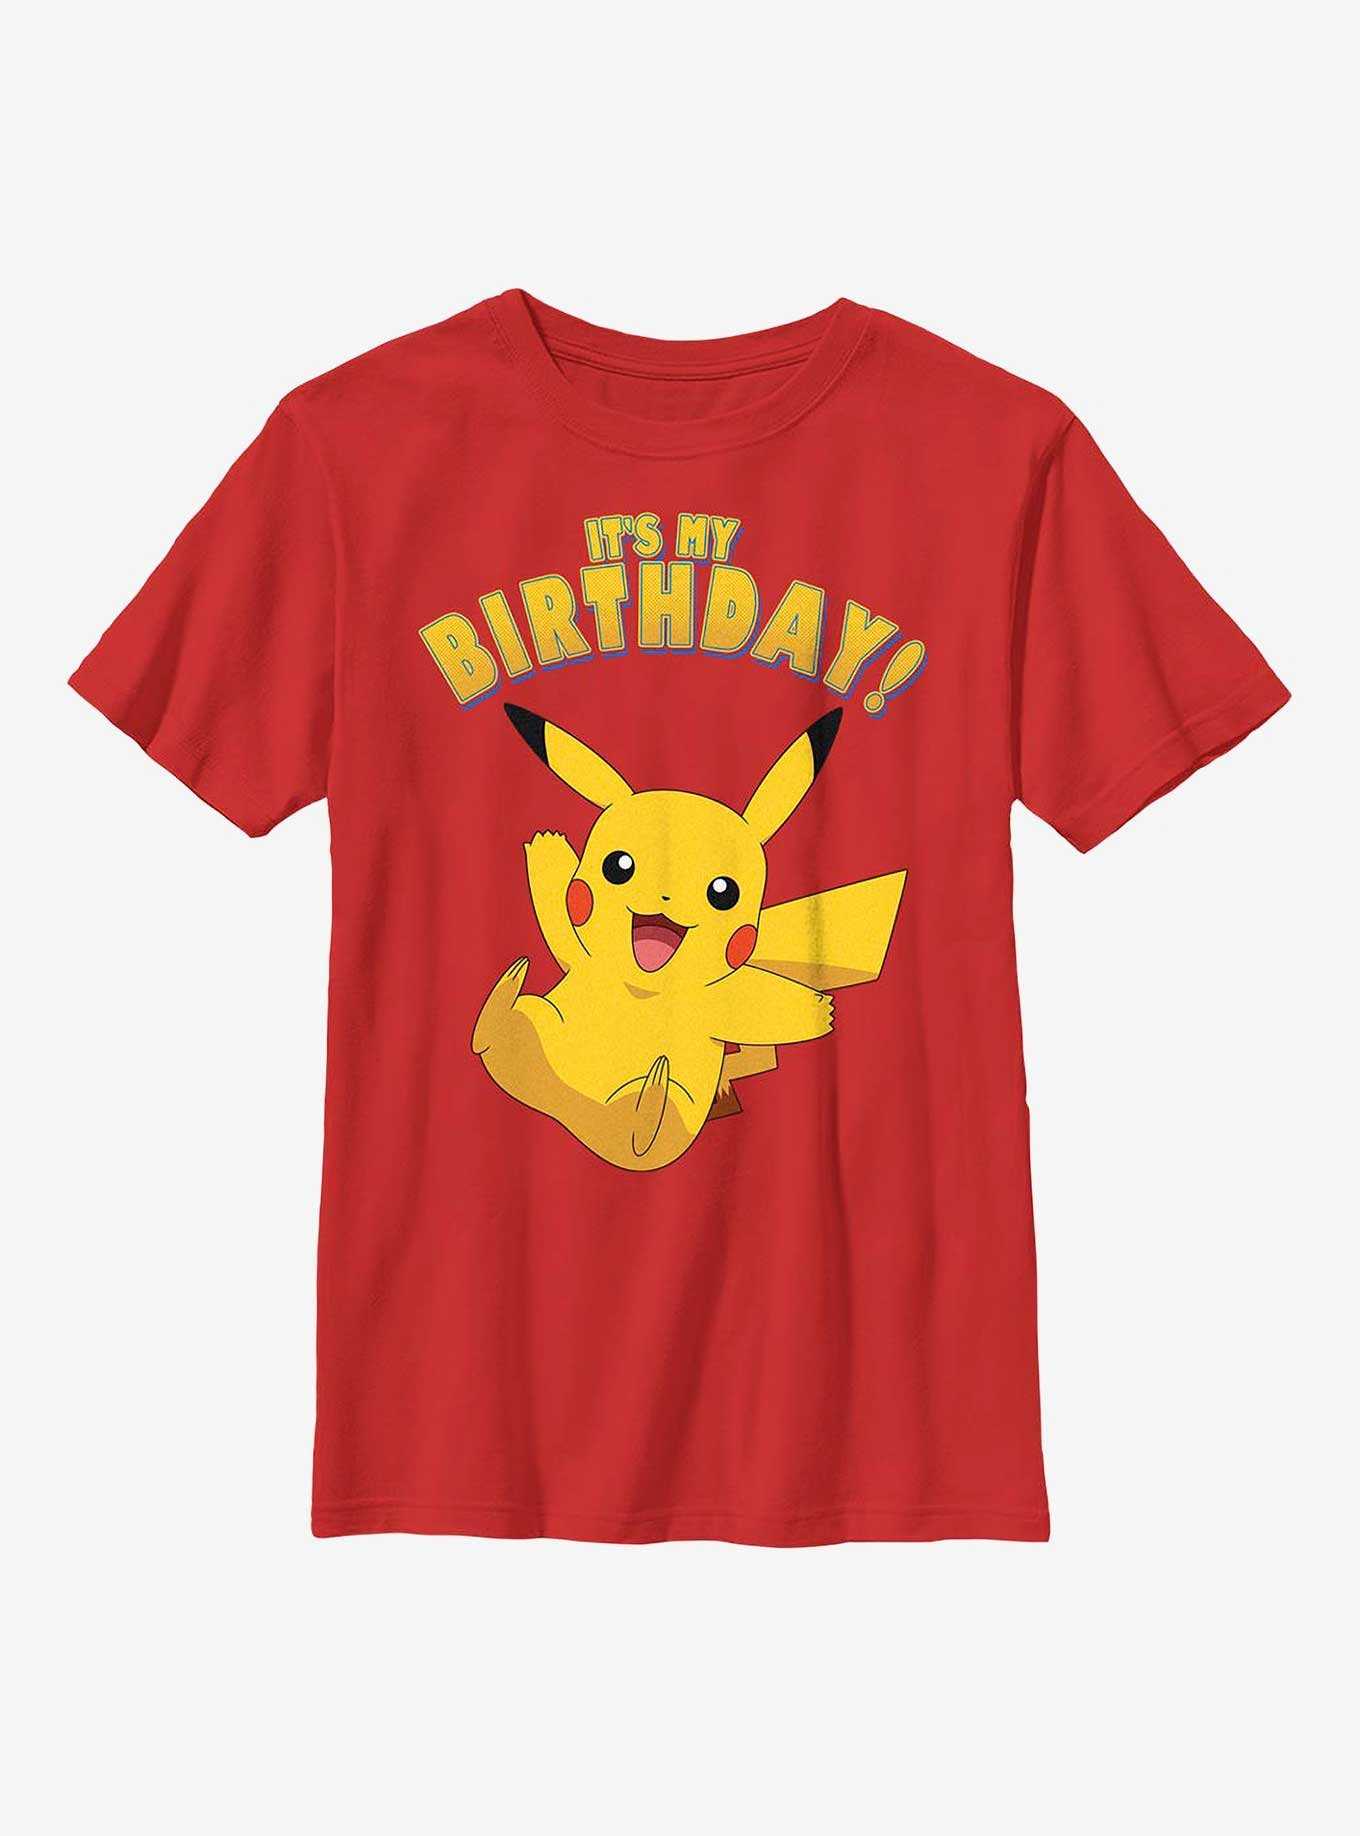 Pokemon Pikachu Birthday Party Youth T-Shirt, , hi-res